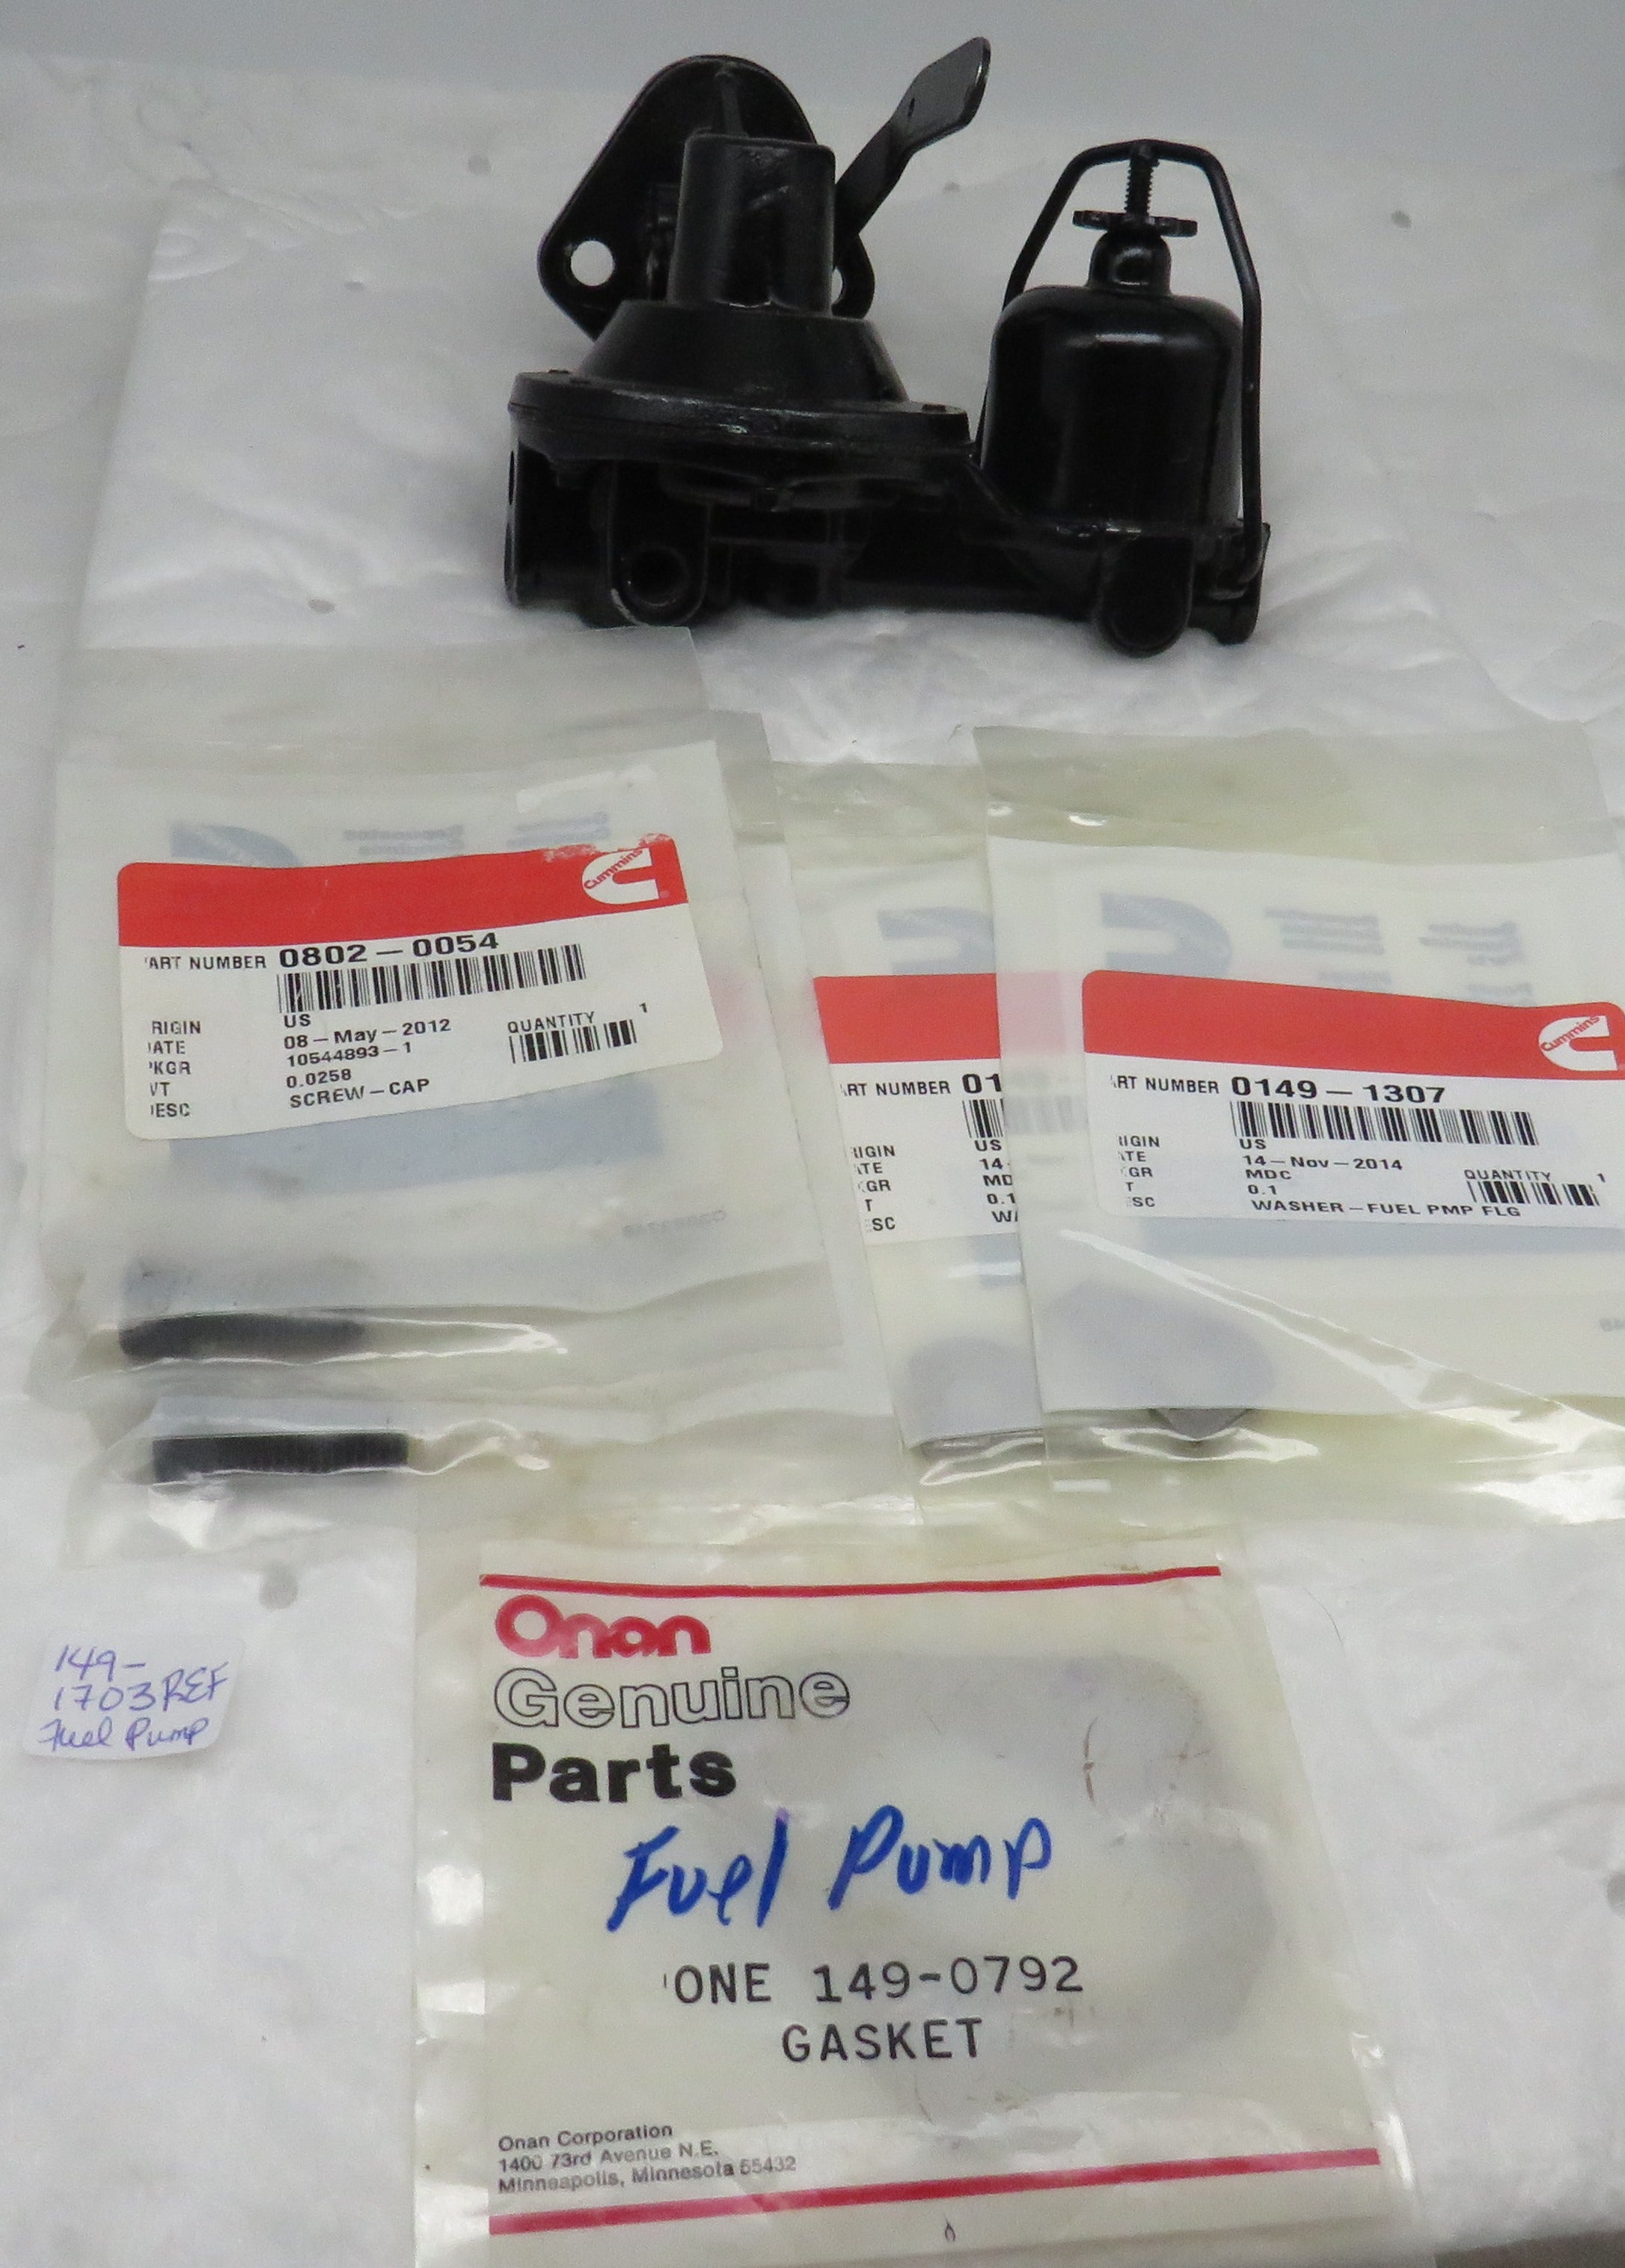 REFURBISHED Onan 149-1703 Fuel Pump Kit Includes 149-1038 Fuel Pump, 802-0054 (2) screw, 149-0792 (1) gasket, 149-1307(2) washer OBSOLETE Black Body 